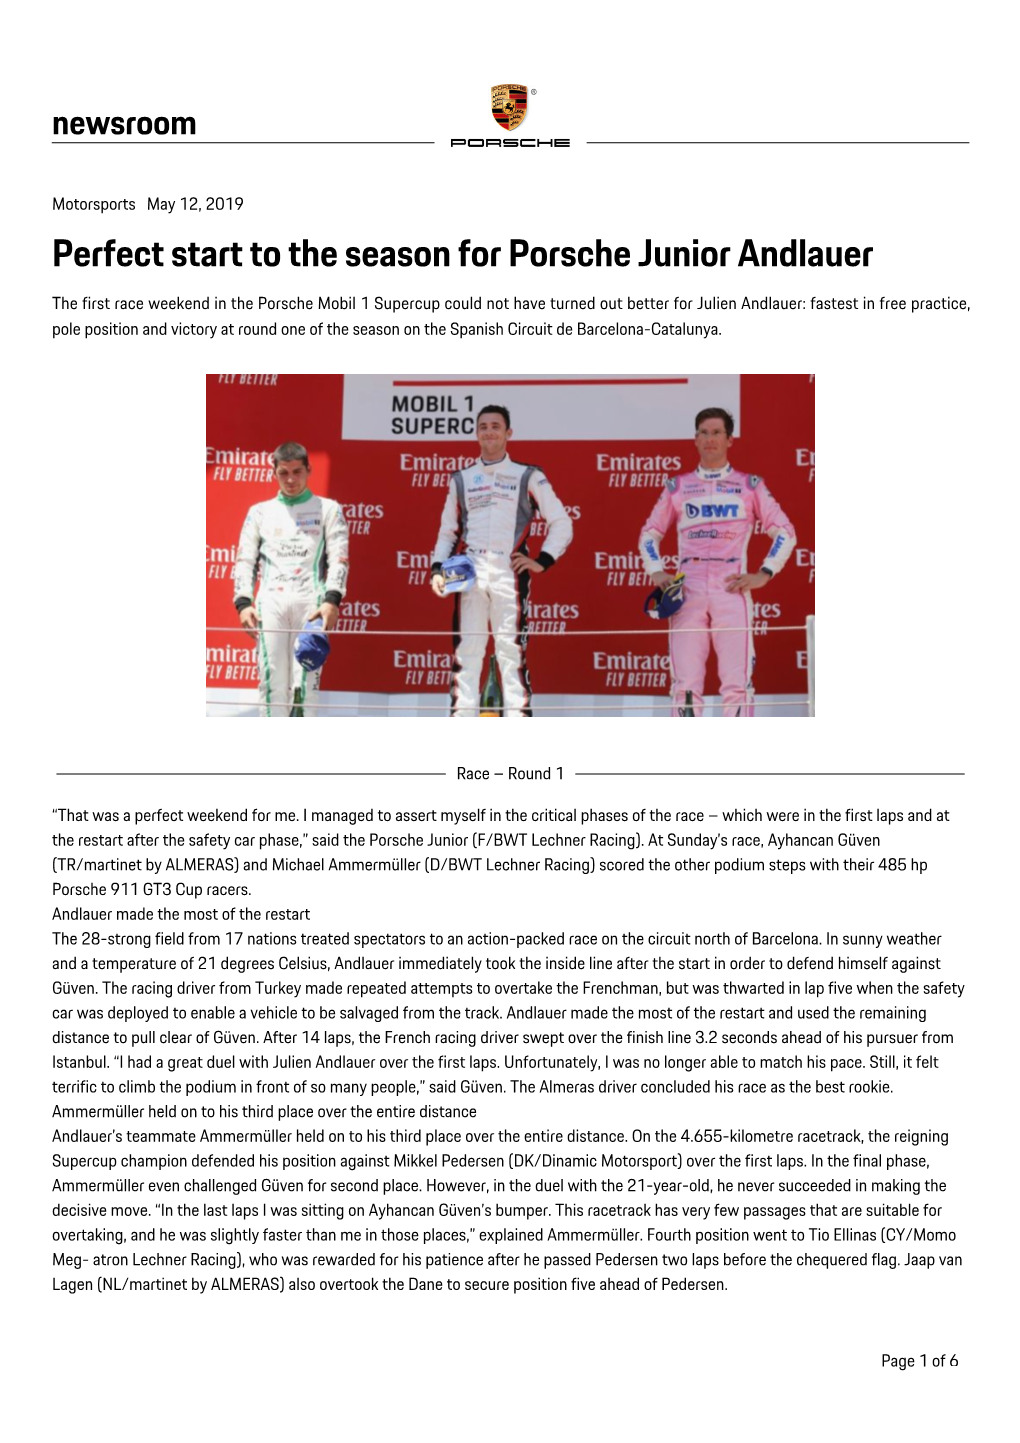 Perfect Start to the Season for Porsche Junior Andlauer